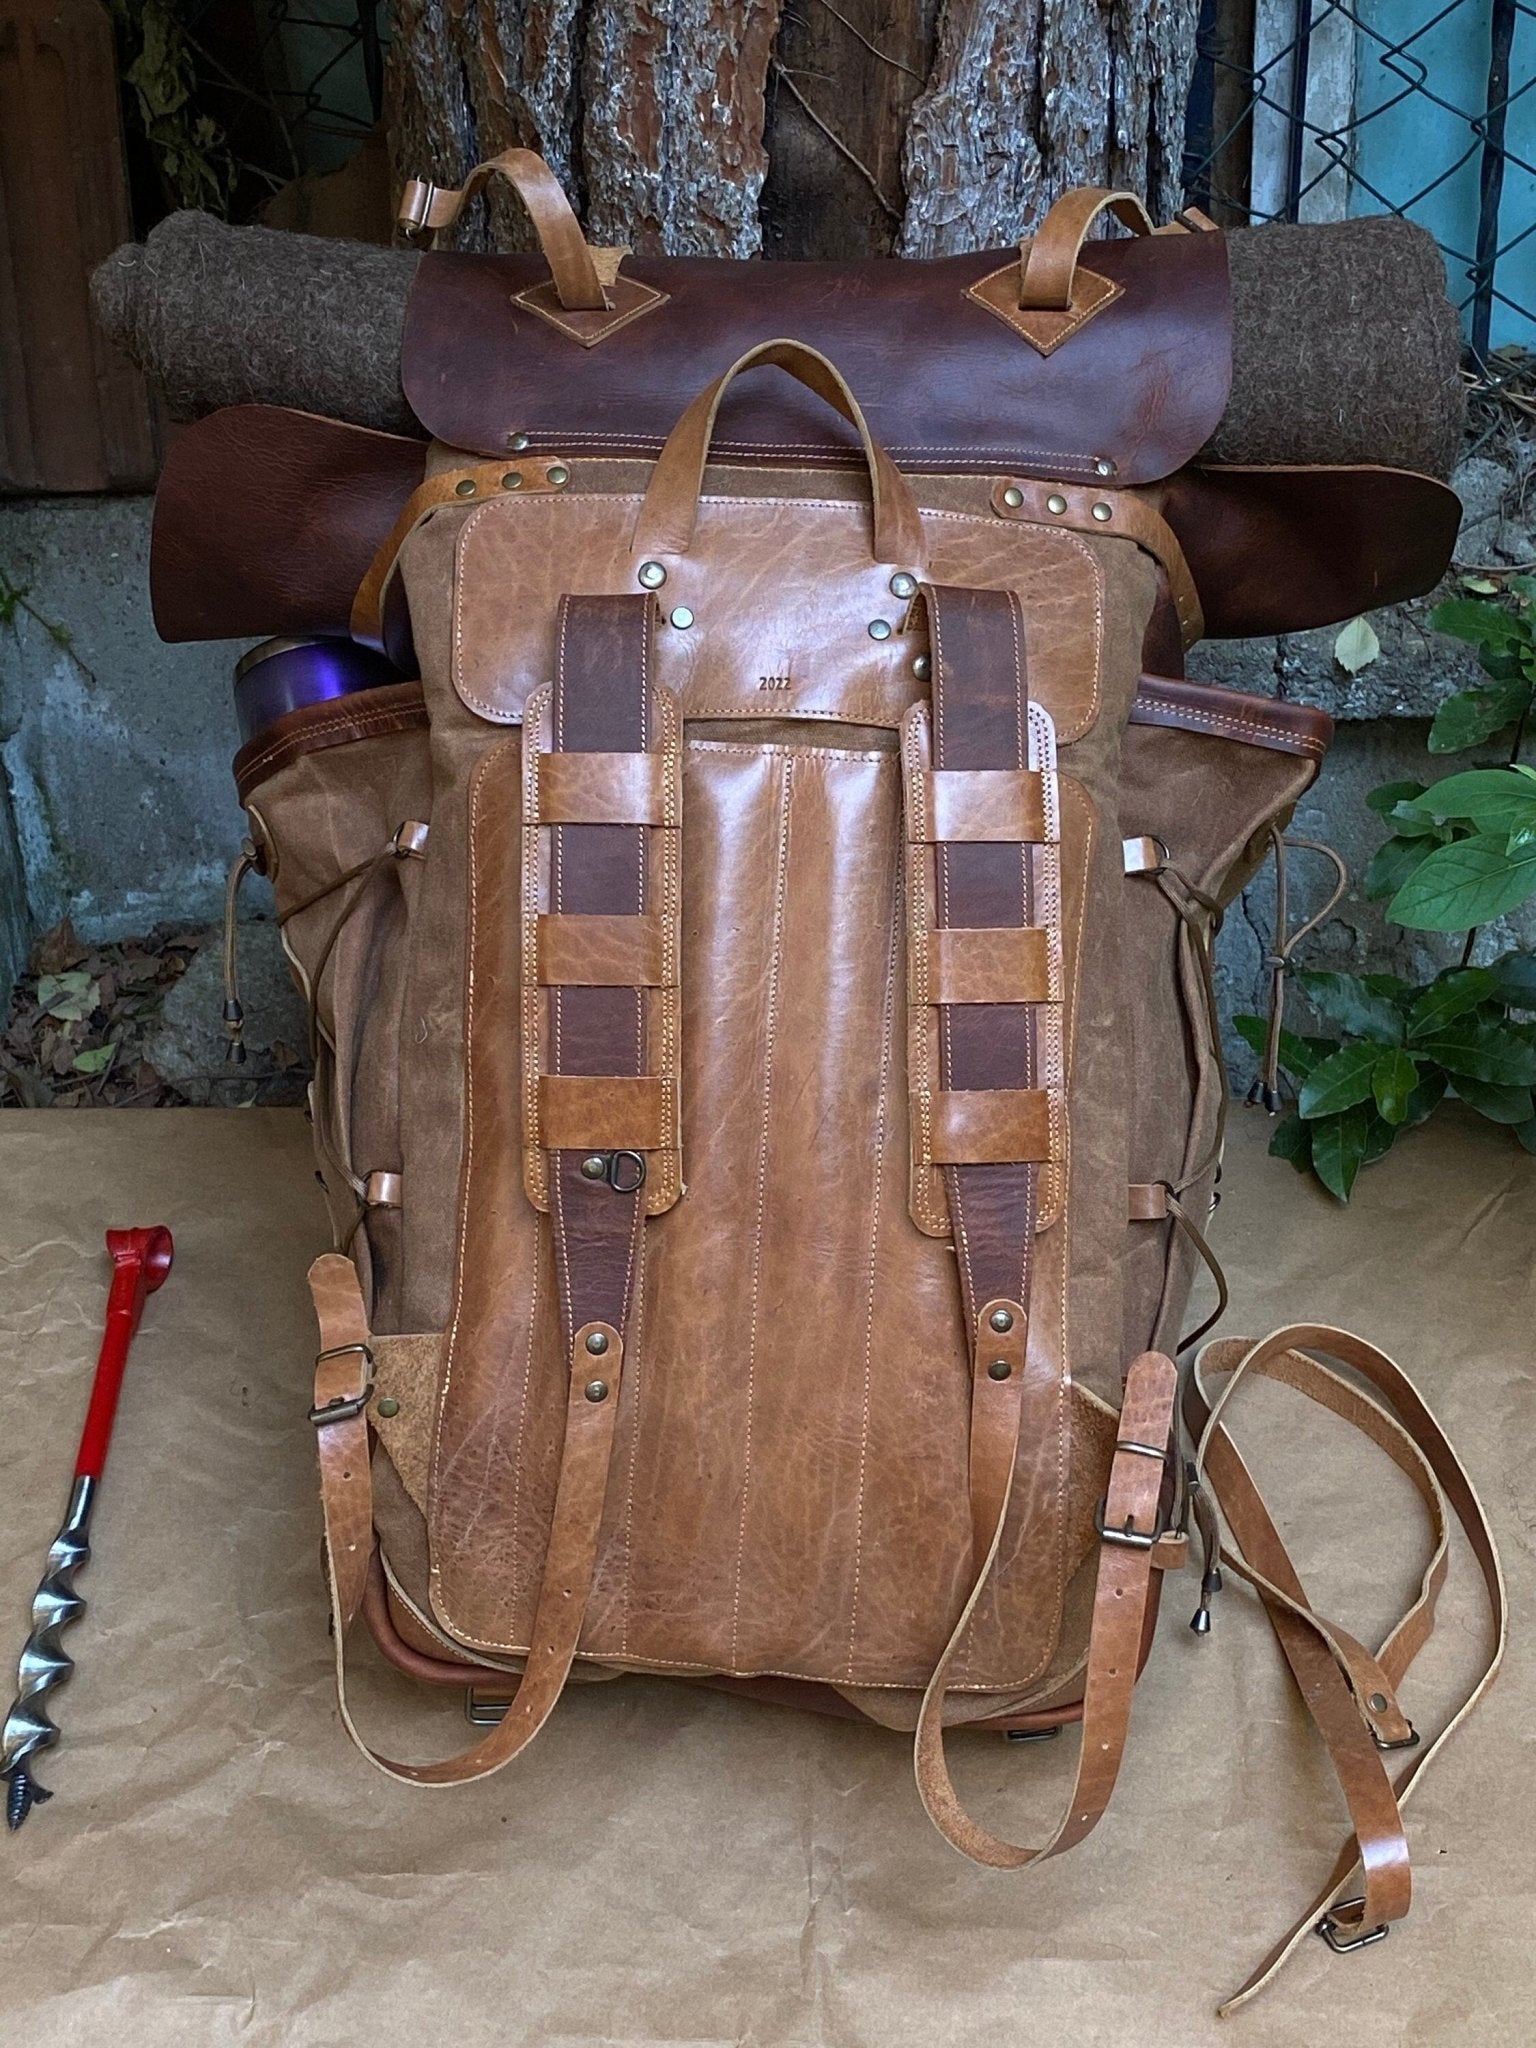 Vintage Leather Backpack | Bag | Waxed Canvas Backpack | Handmade Daypack - Travel - Camping- Hiking- Bushcraft | Rucksack | Personalization bushcraft - camping - hiking backpack 99percenthandmade   